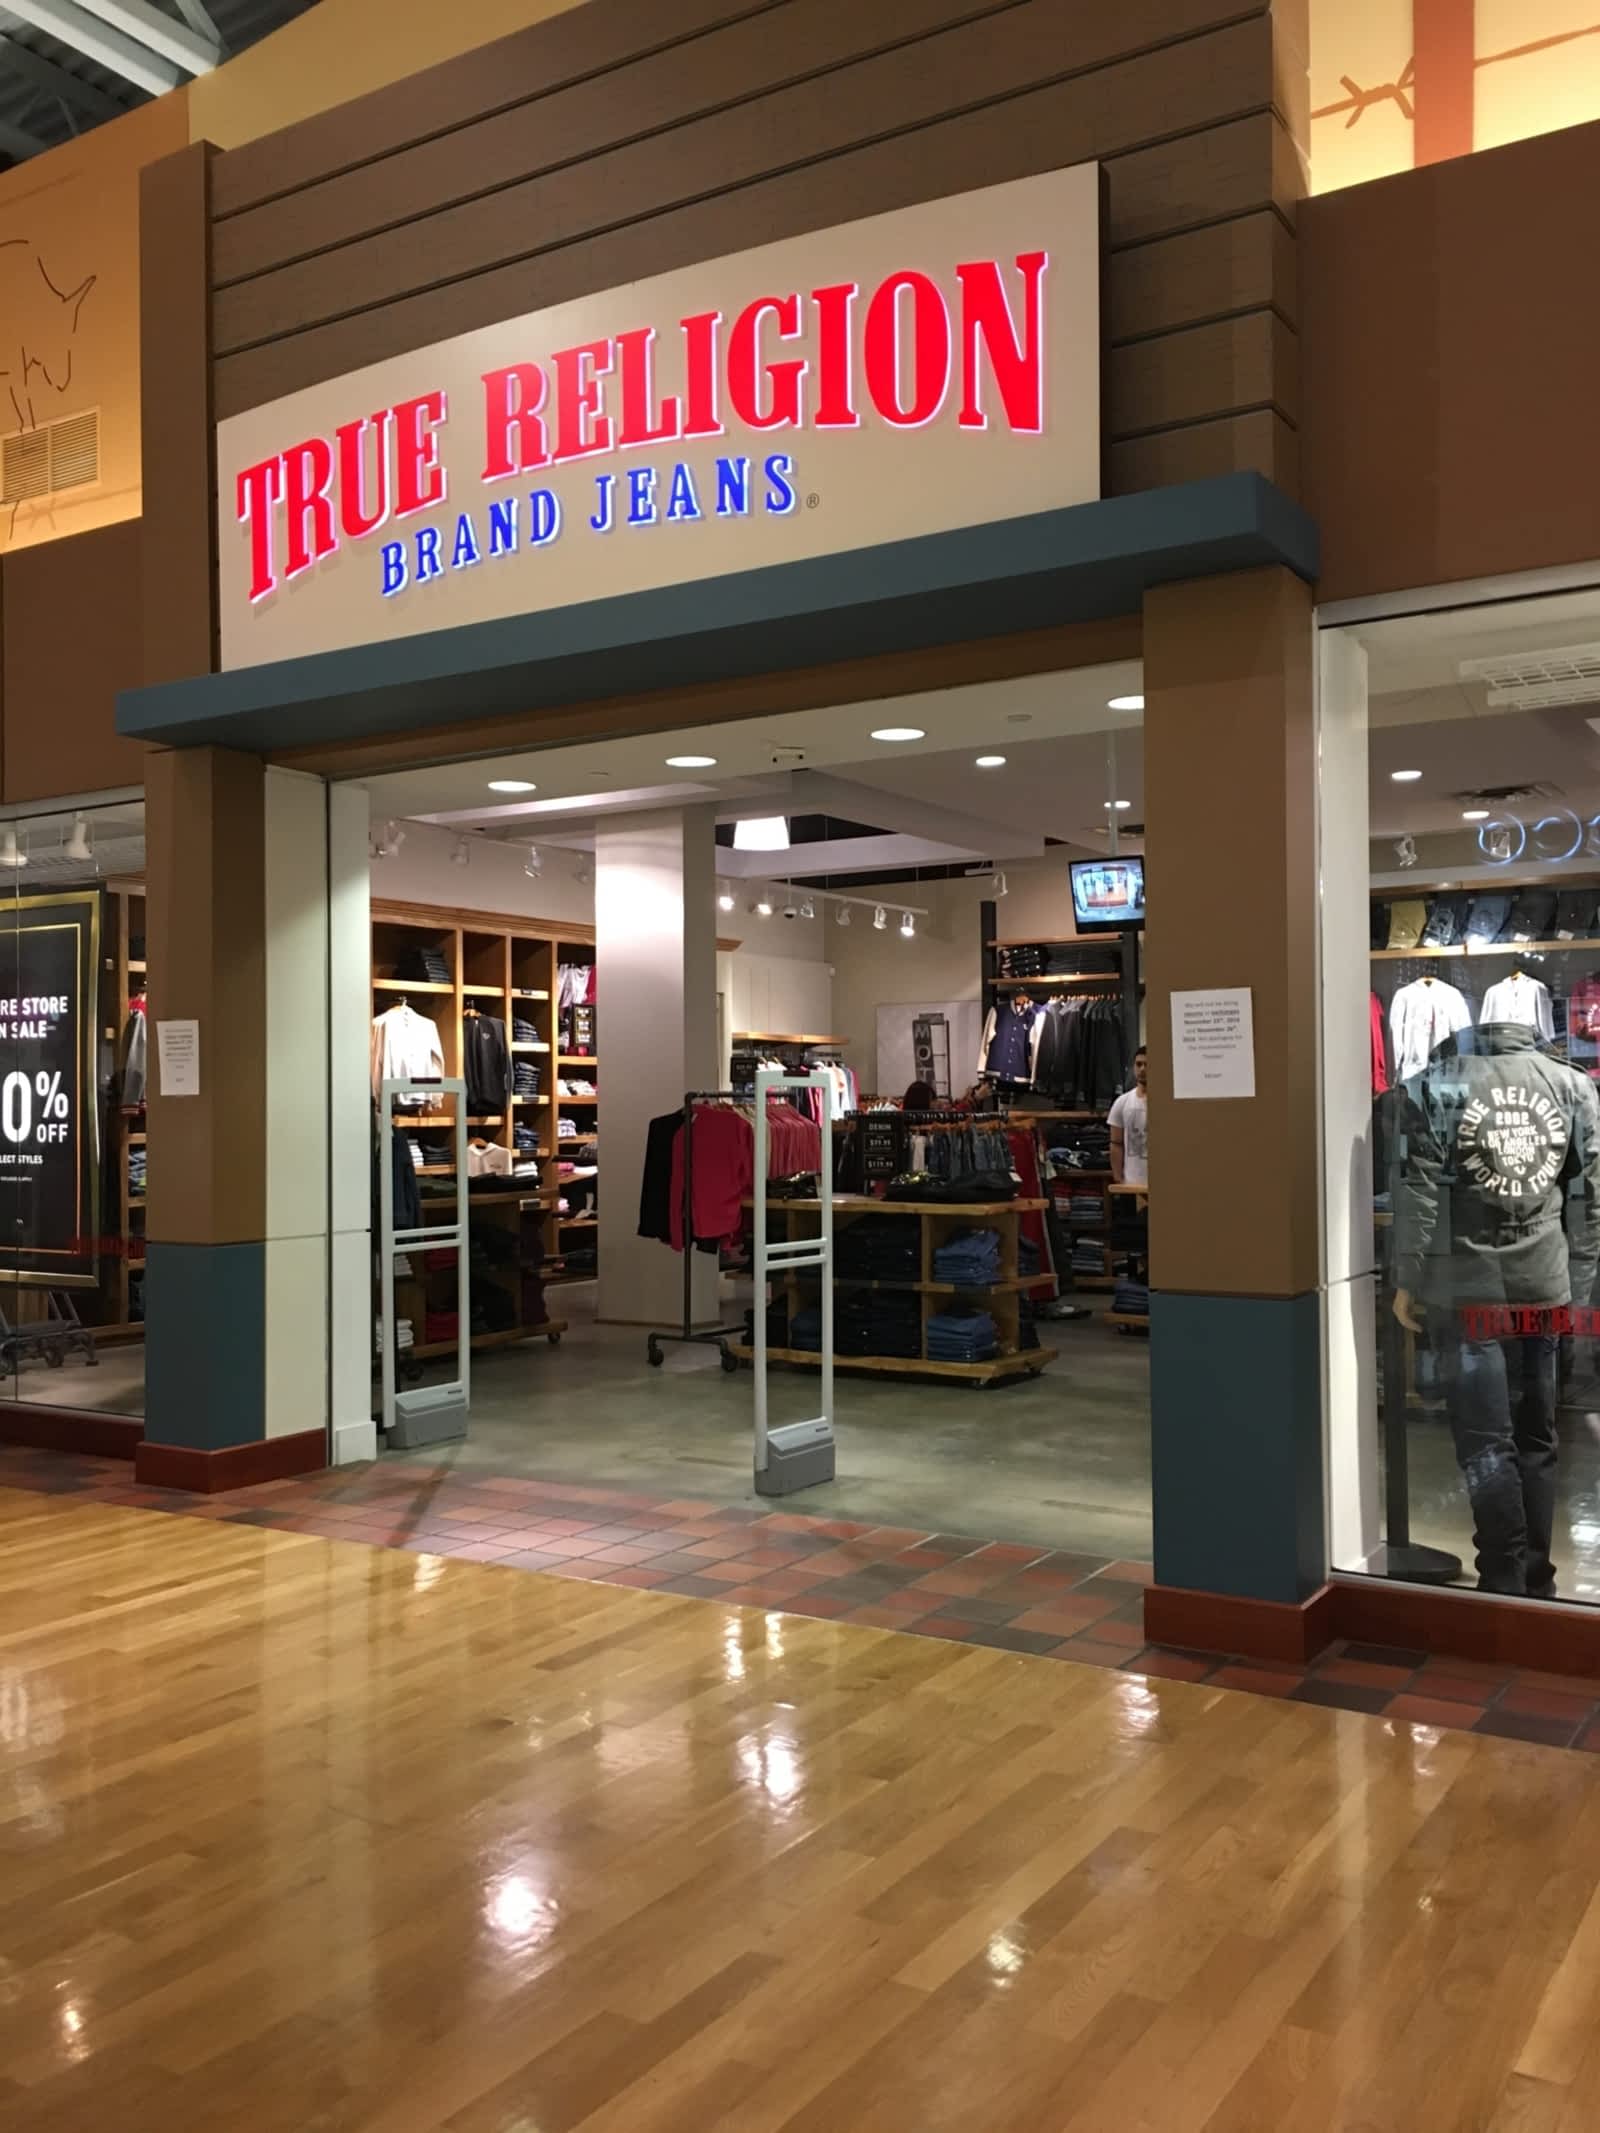 true religion discount store